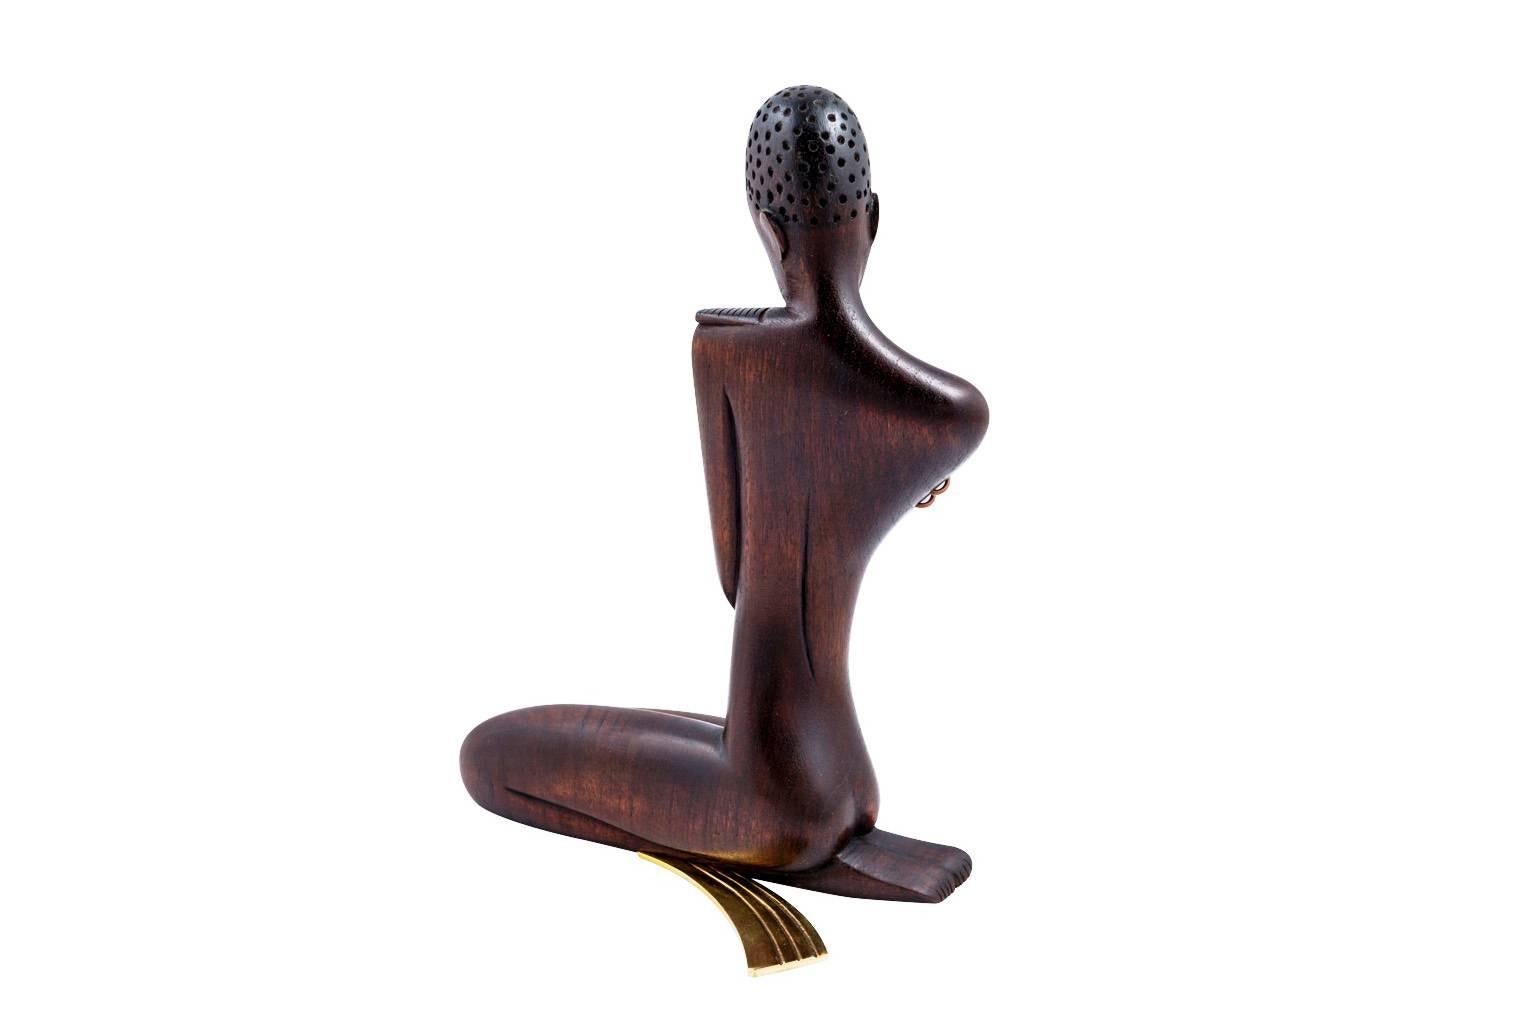 Art Deco Werkstätte Hagenauer African Woman Figurine, Brass and Precious Wood, circa 1950